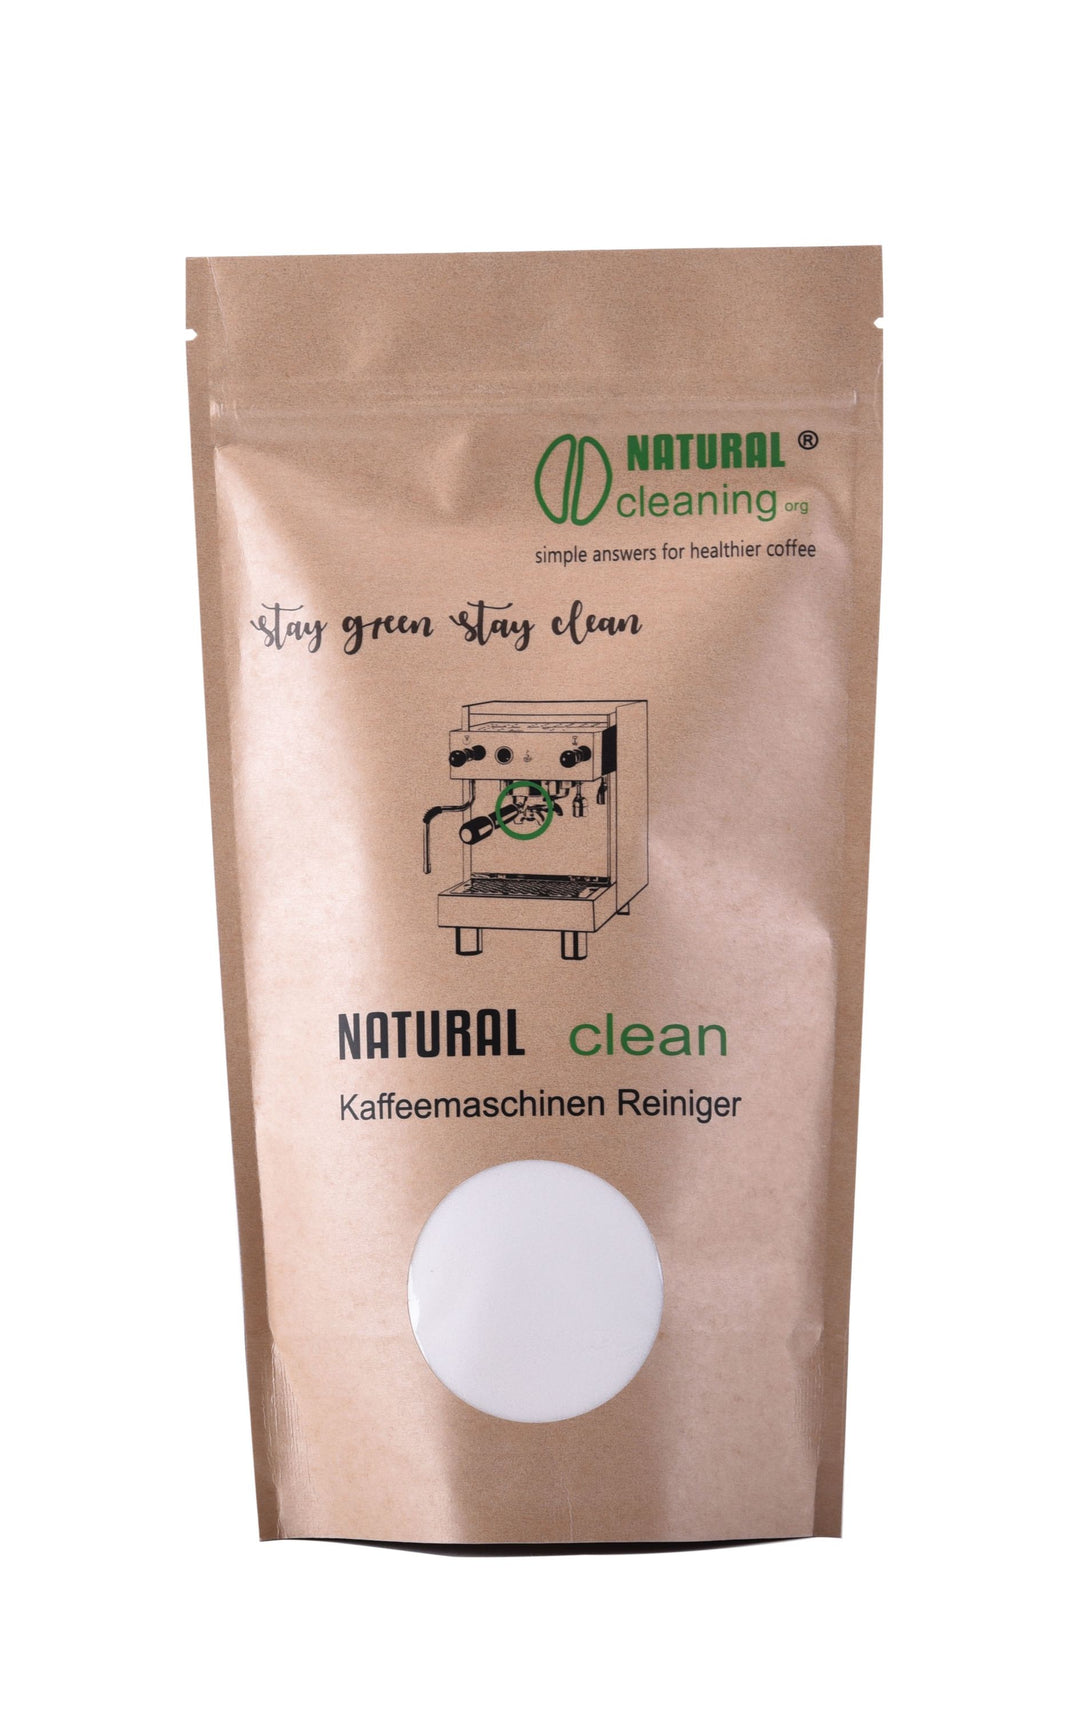 Coffee machine cleaner Natural clean